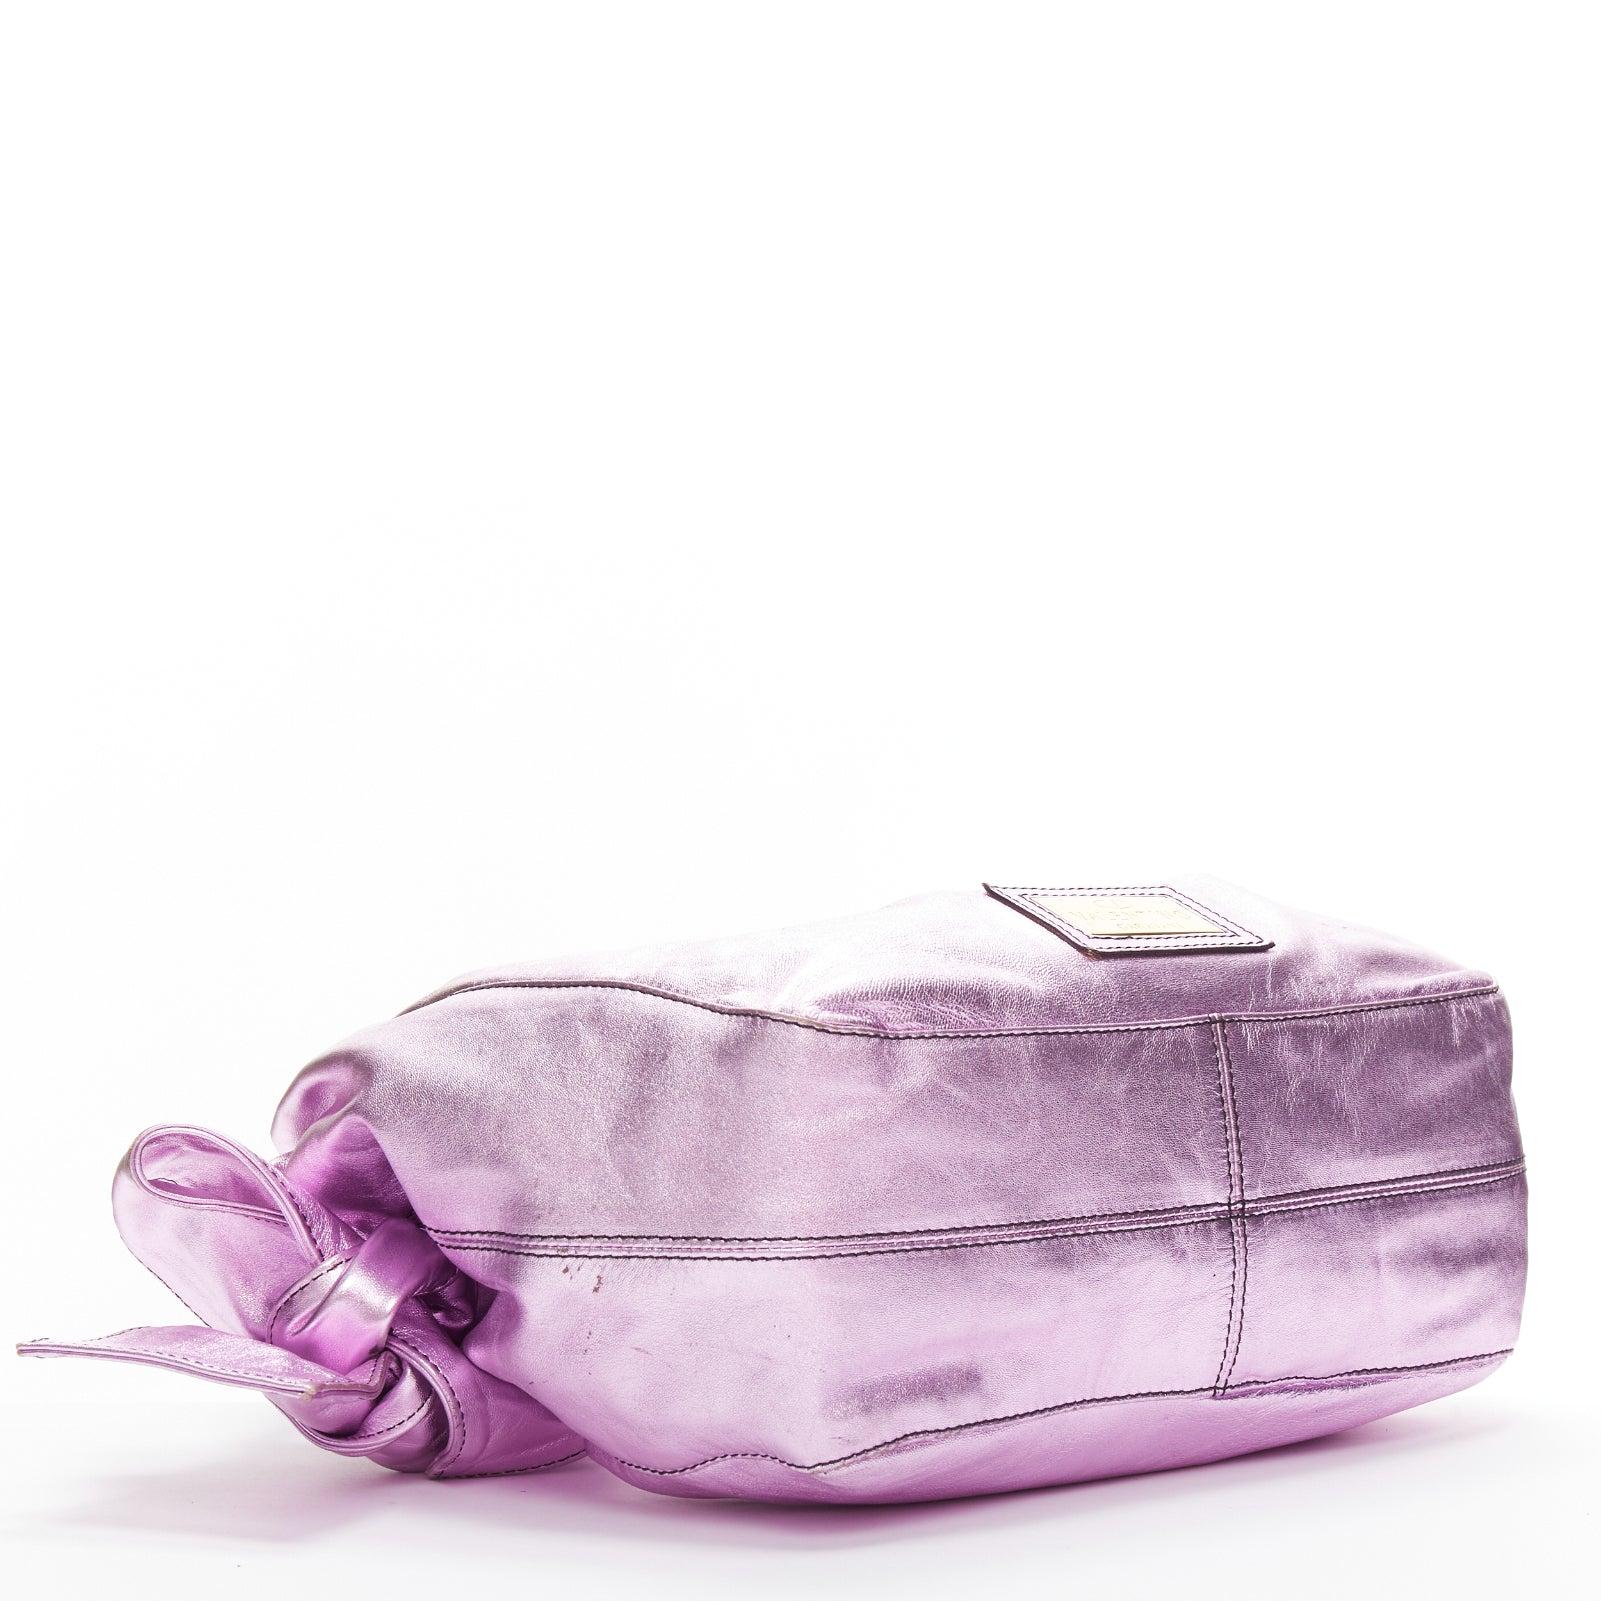 VALENTINO GARAVANI metallic purple leather bow detail hobo tote bag For Sale 1